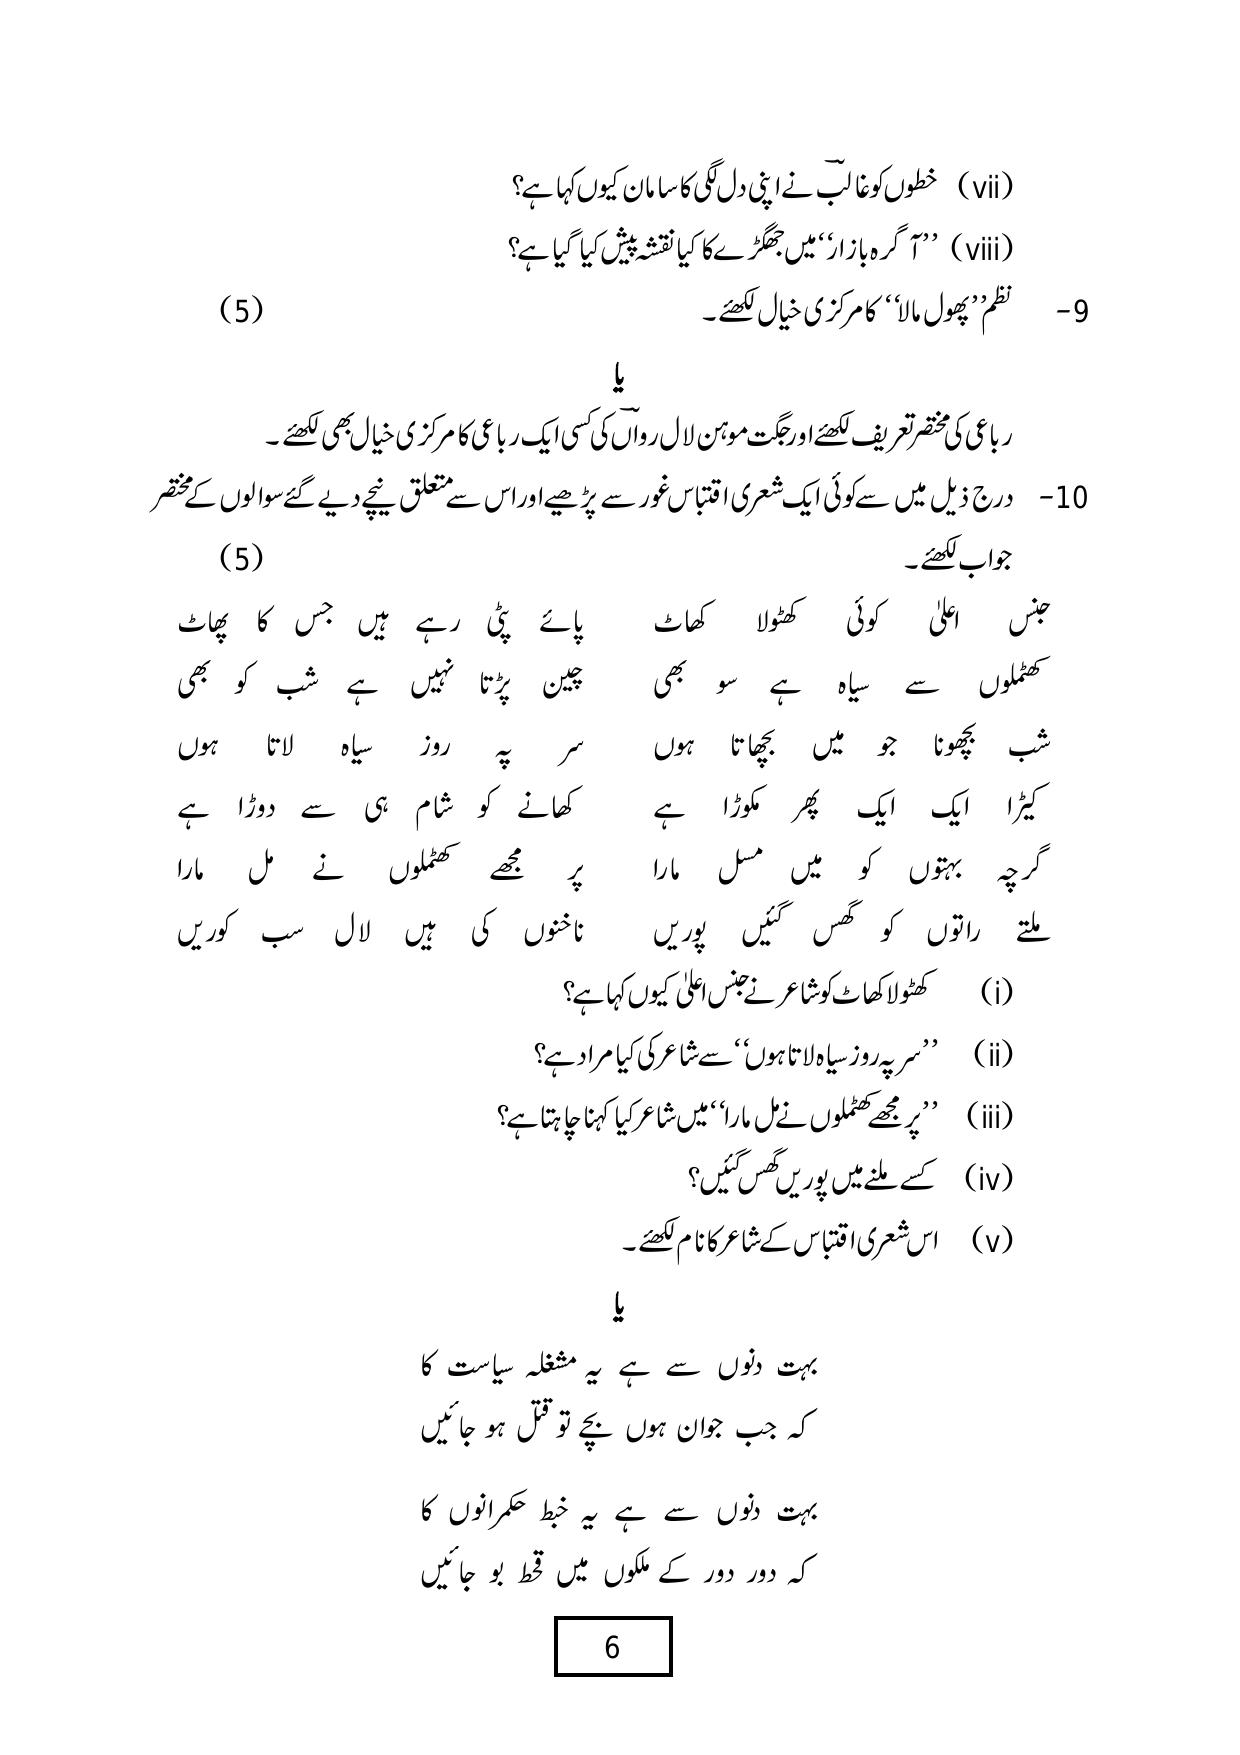 CBSE Class 12 Urdu Core -Sample Paper 2019-20 - Page 6